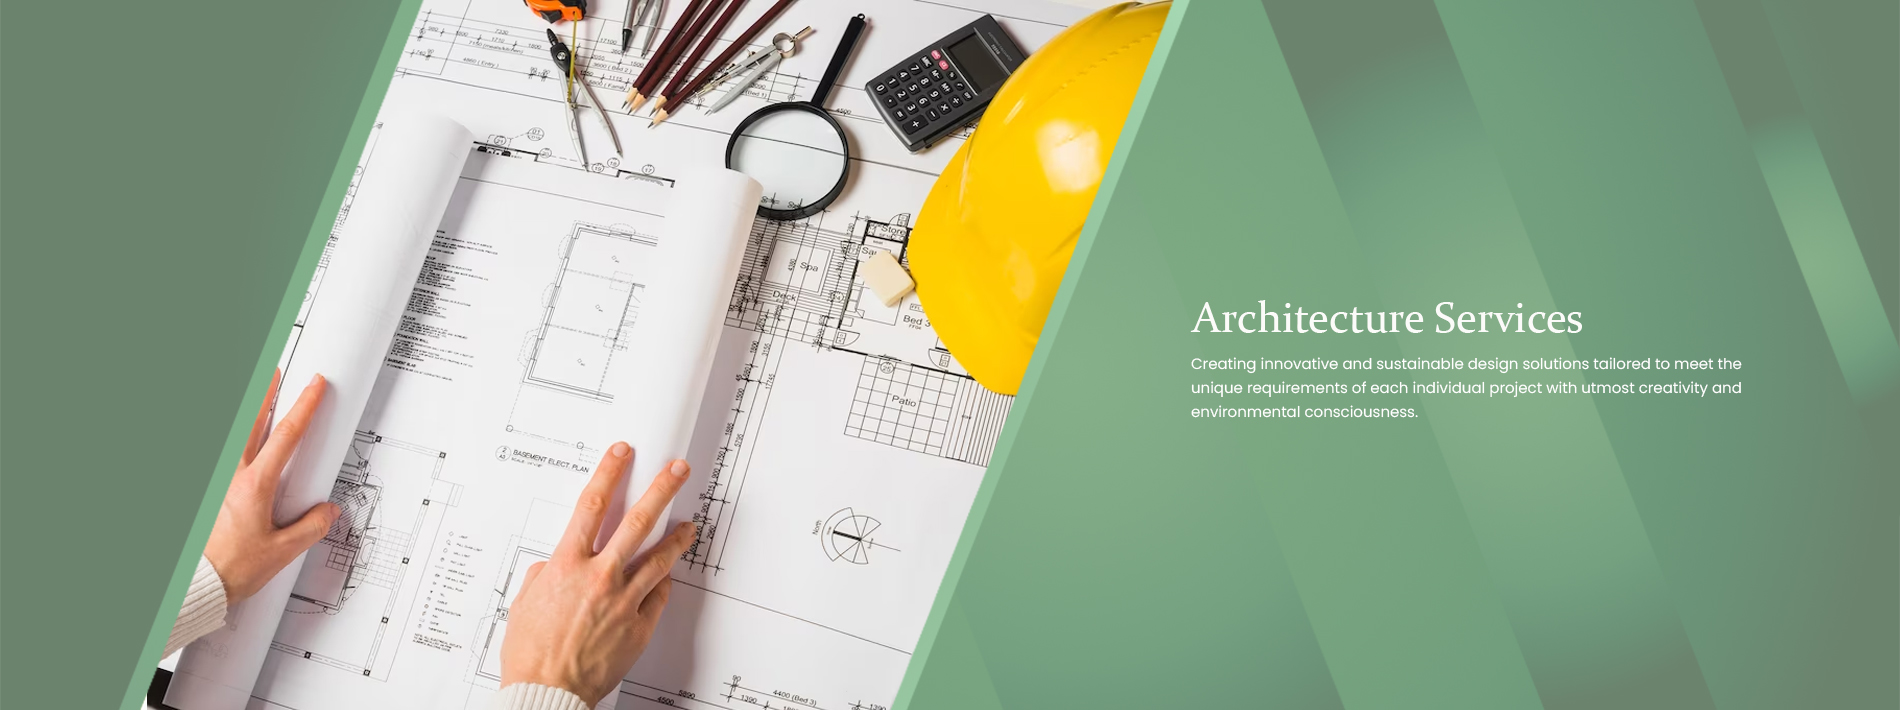 Architecture Services